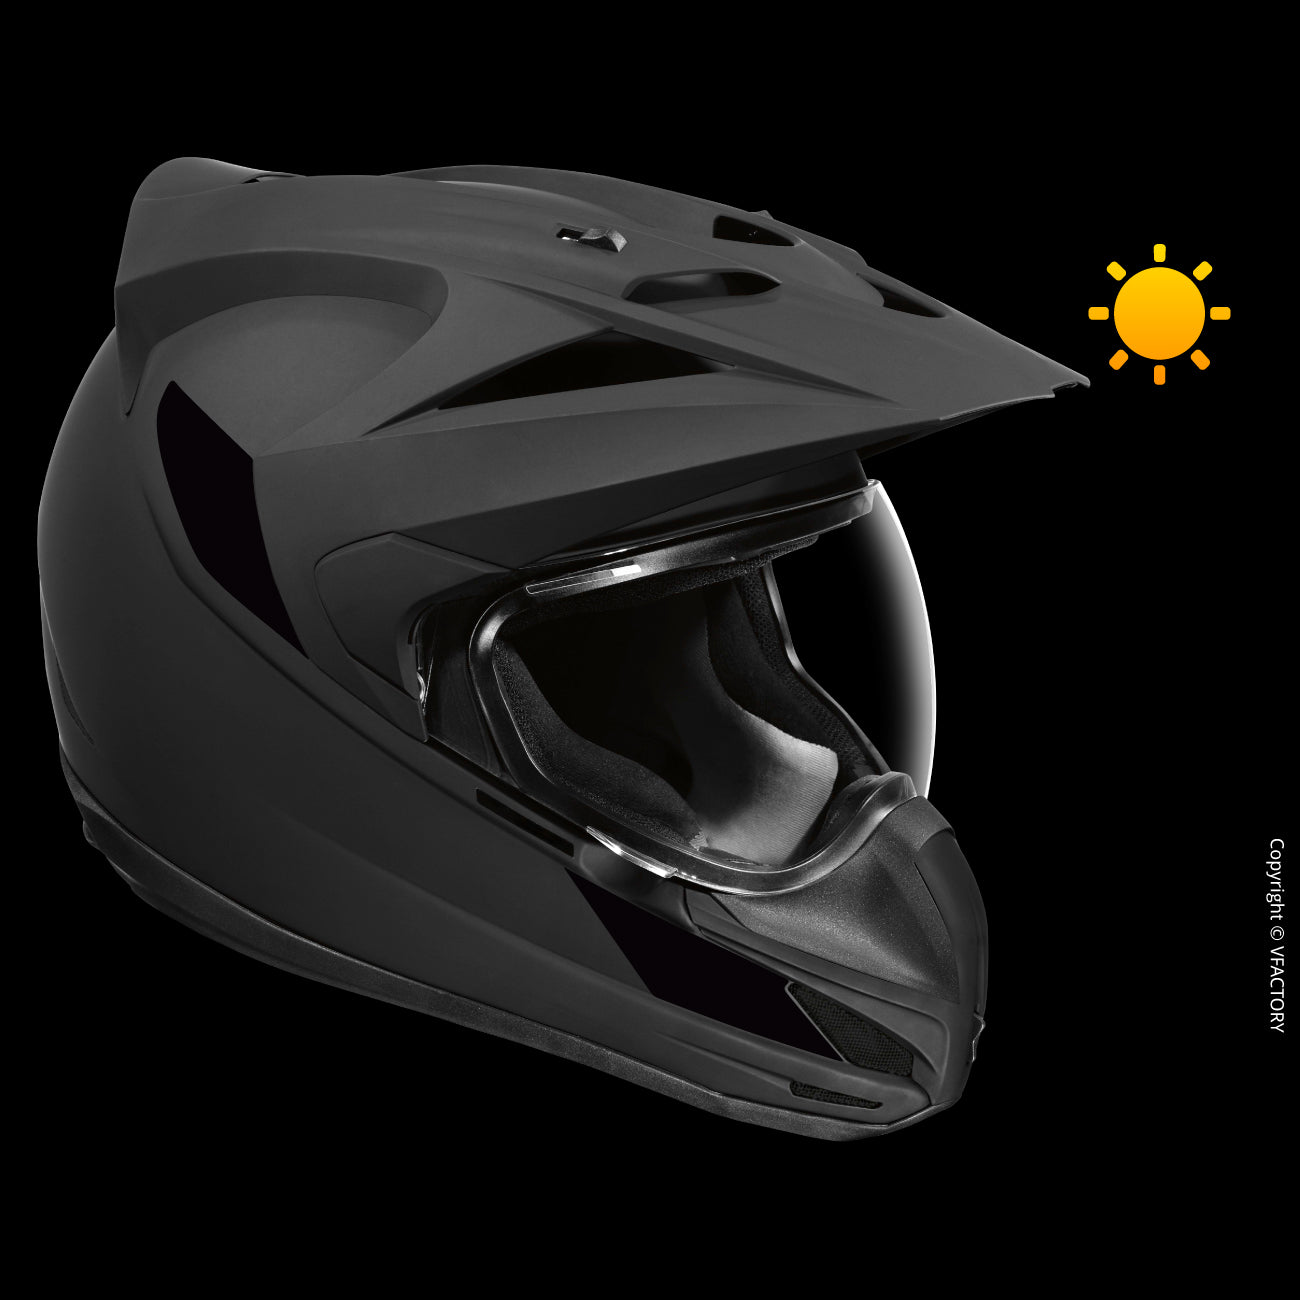 Sticker réfléchissant casque moto logo BMW V2 - 3M™ par VFLUO 🇫🇷